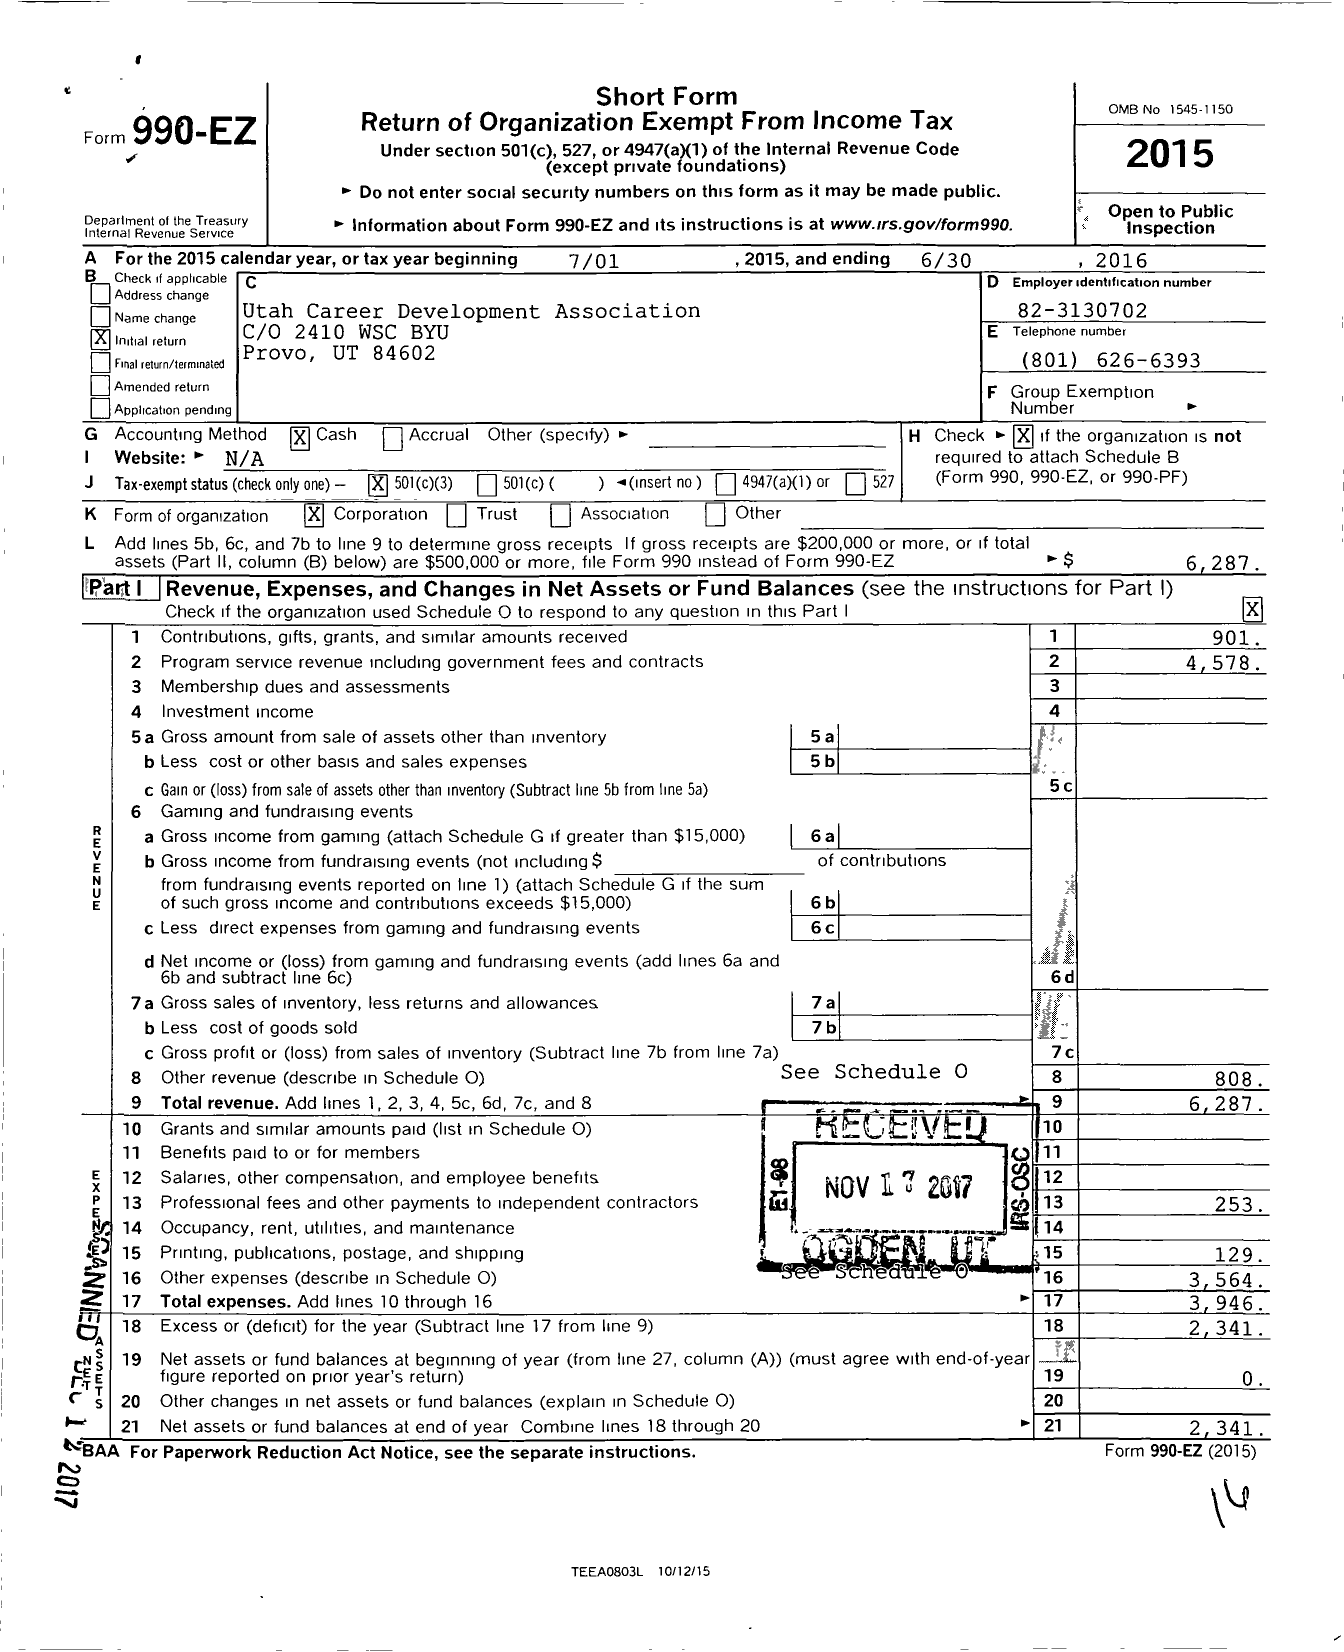 Image of first page of 2015 Form 990EZ for Utah Career Development Association